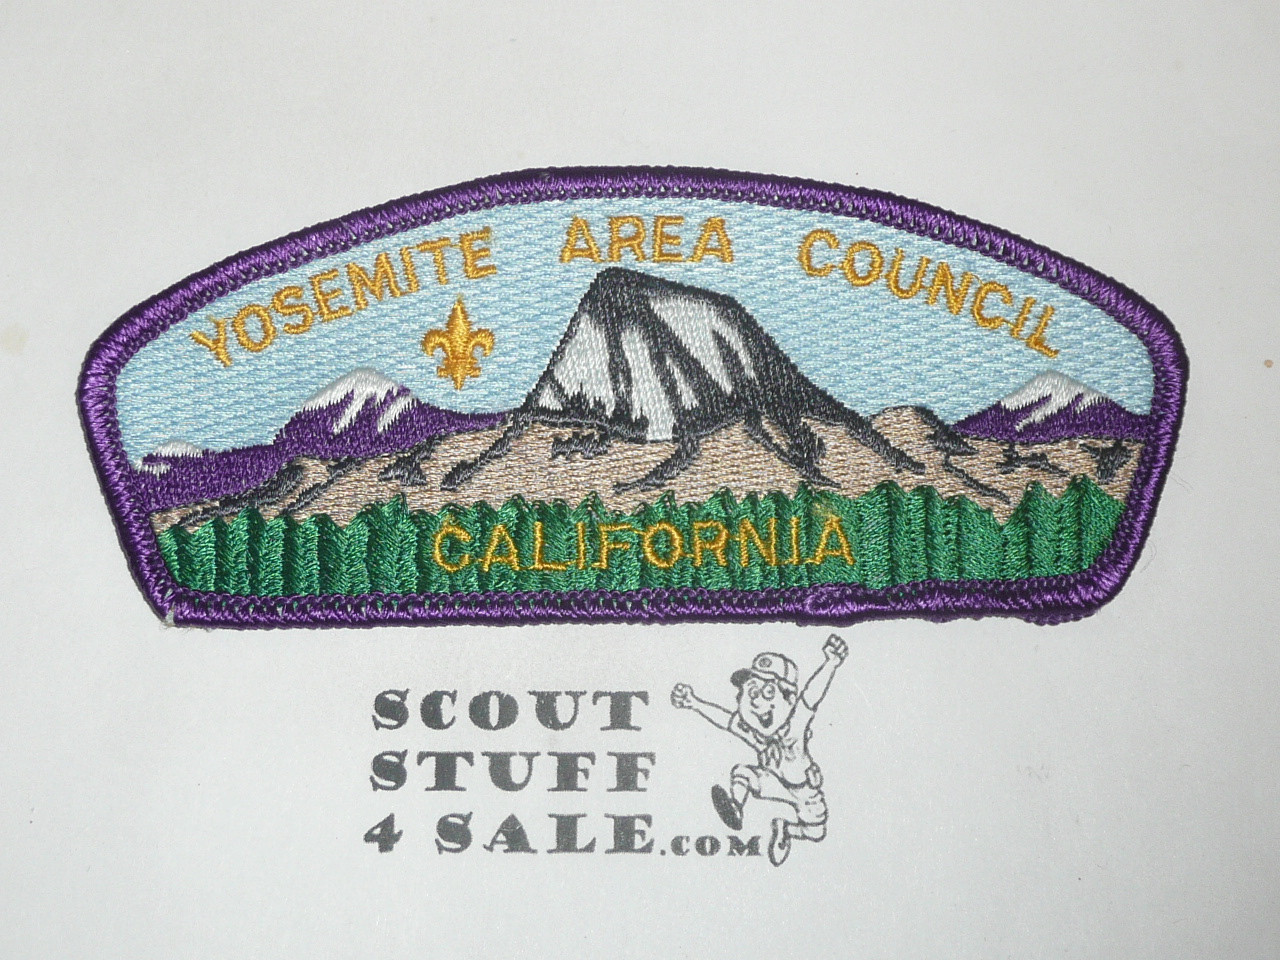 Yosemite Area Council s4 CSP, Council 60th Anniversary - MERGED